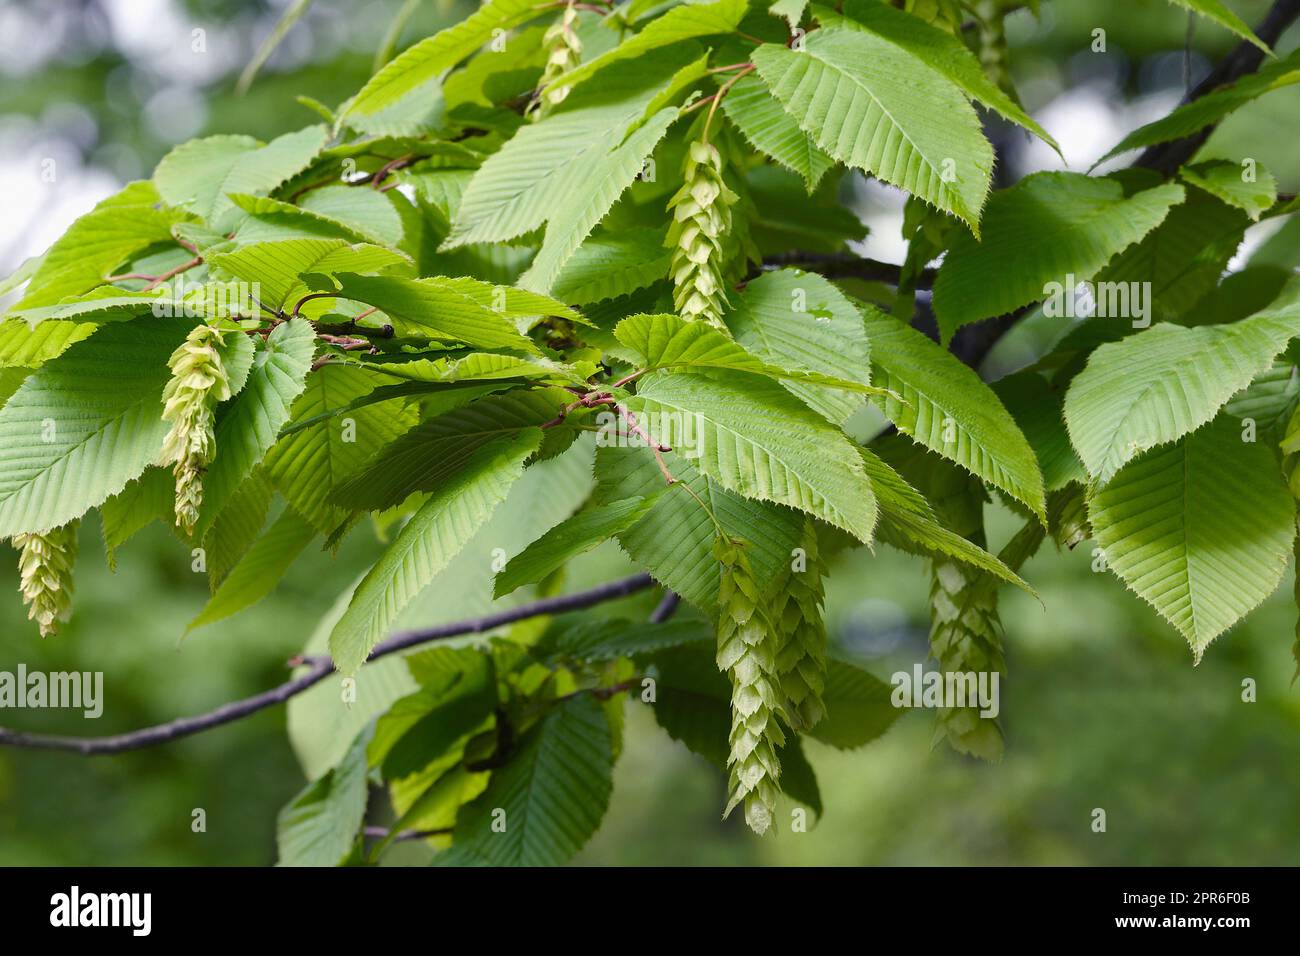 Close-up image of Bigleaf hornbeam leaves and fruits Stock Photo